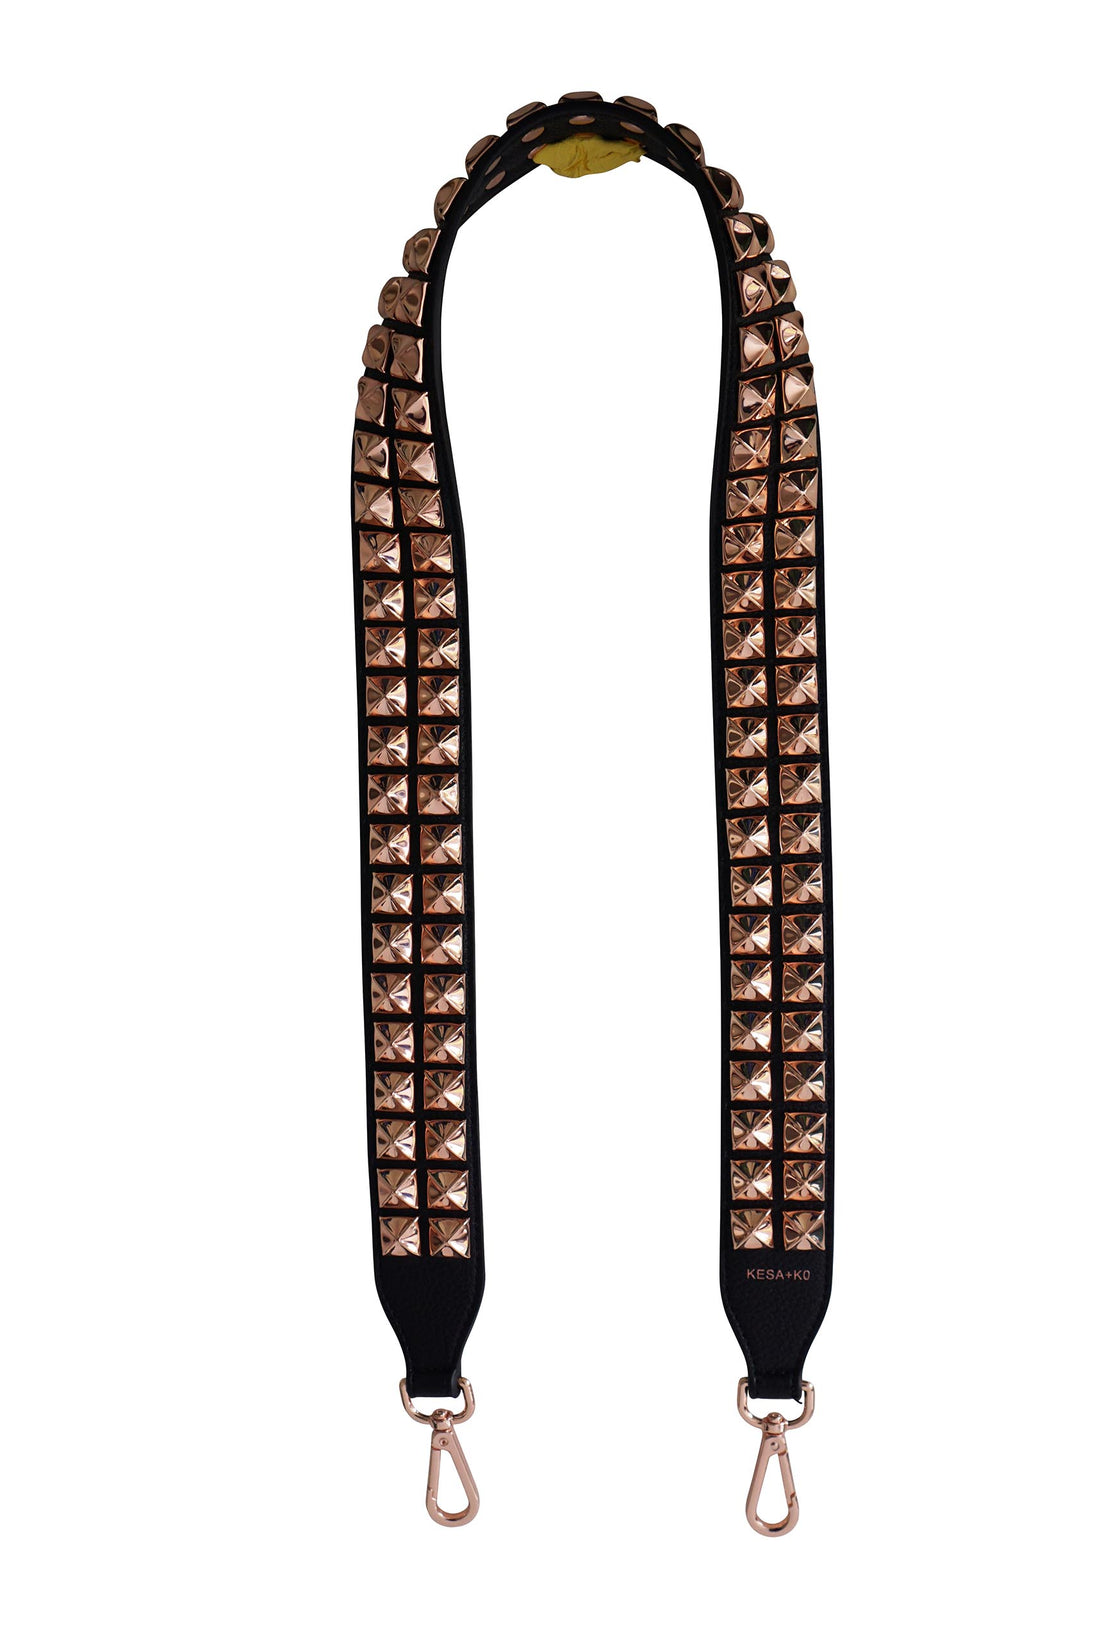 Rose Gold studded bag strap - Dalia Long length